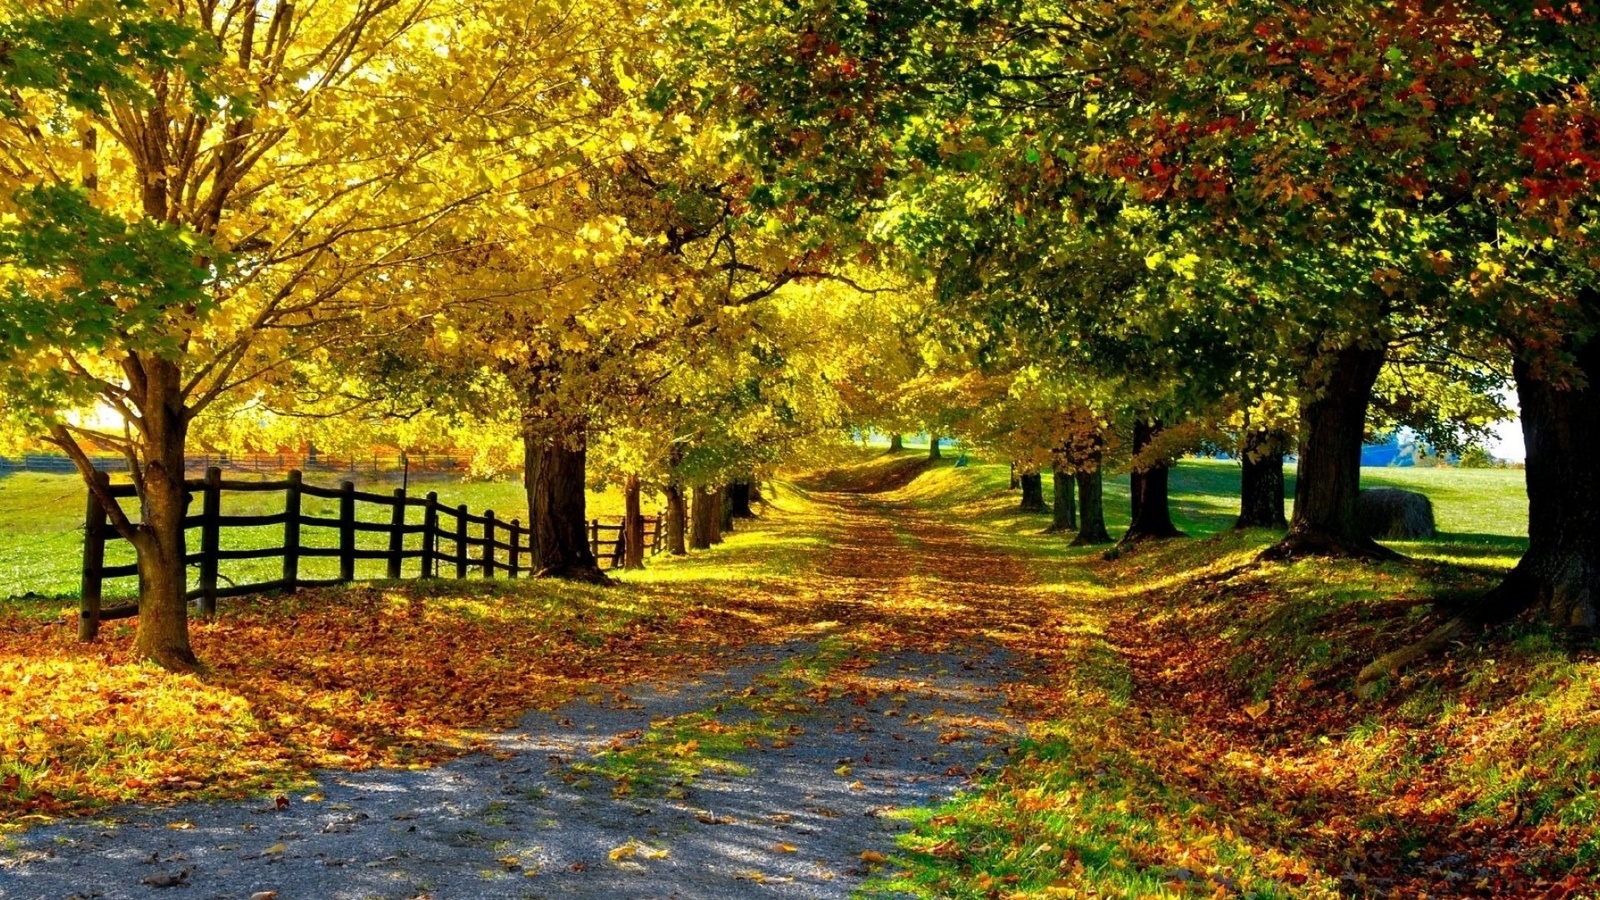 autumn, tree, road, sky, mountain